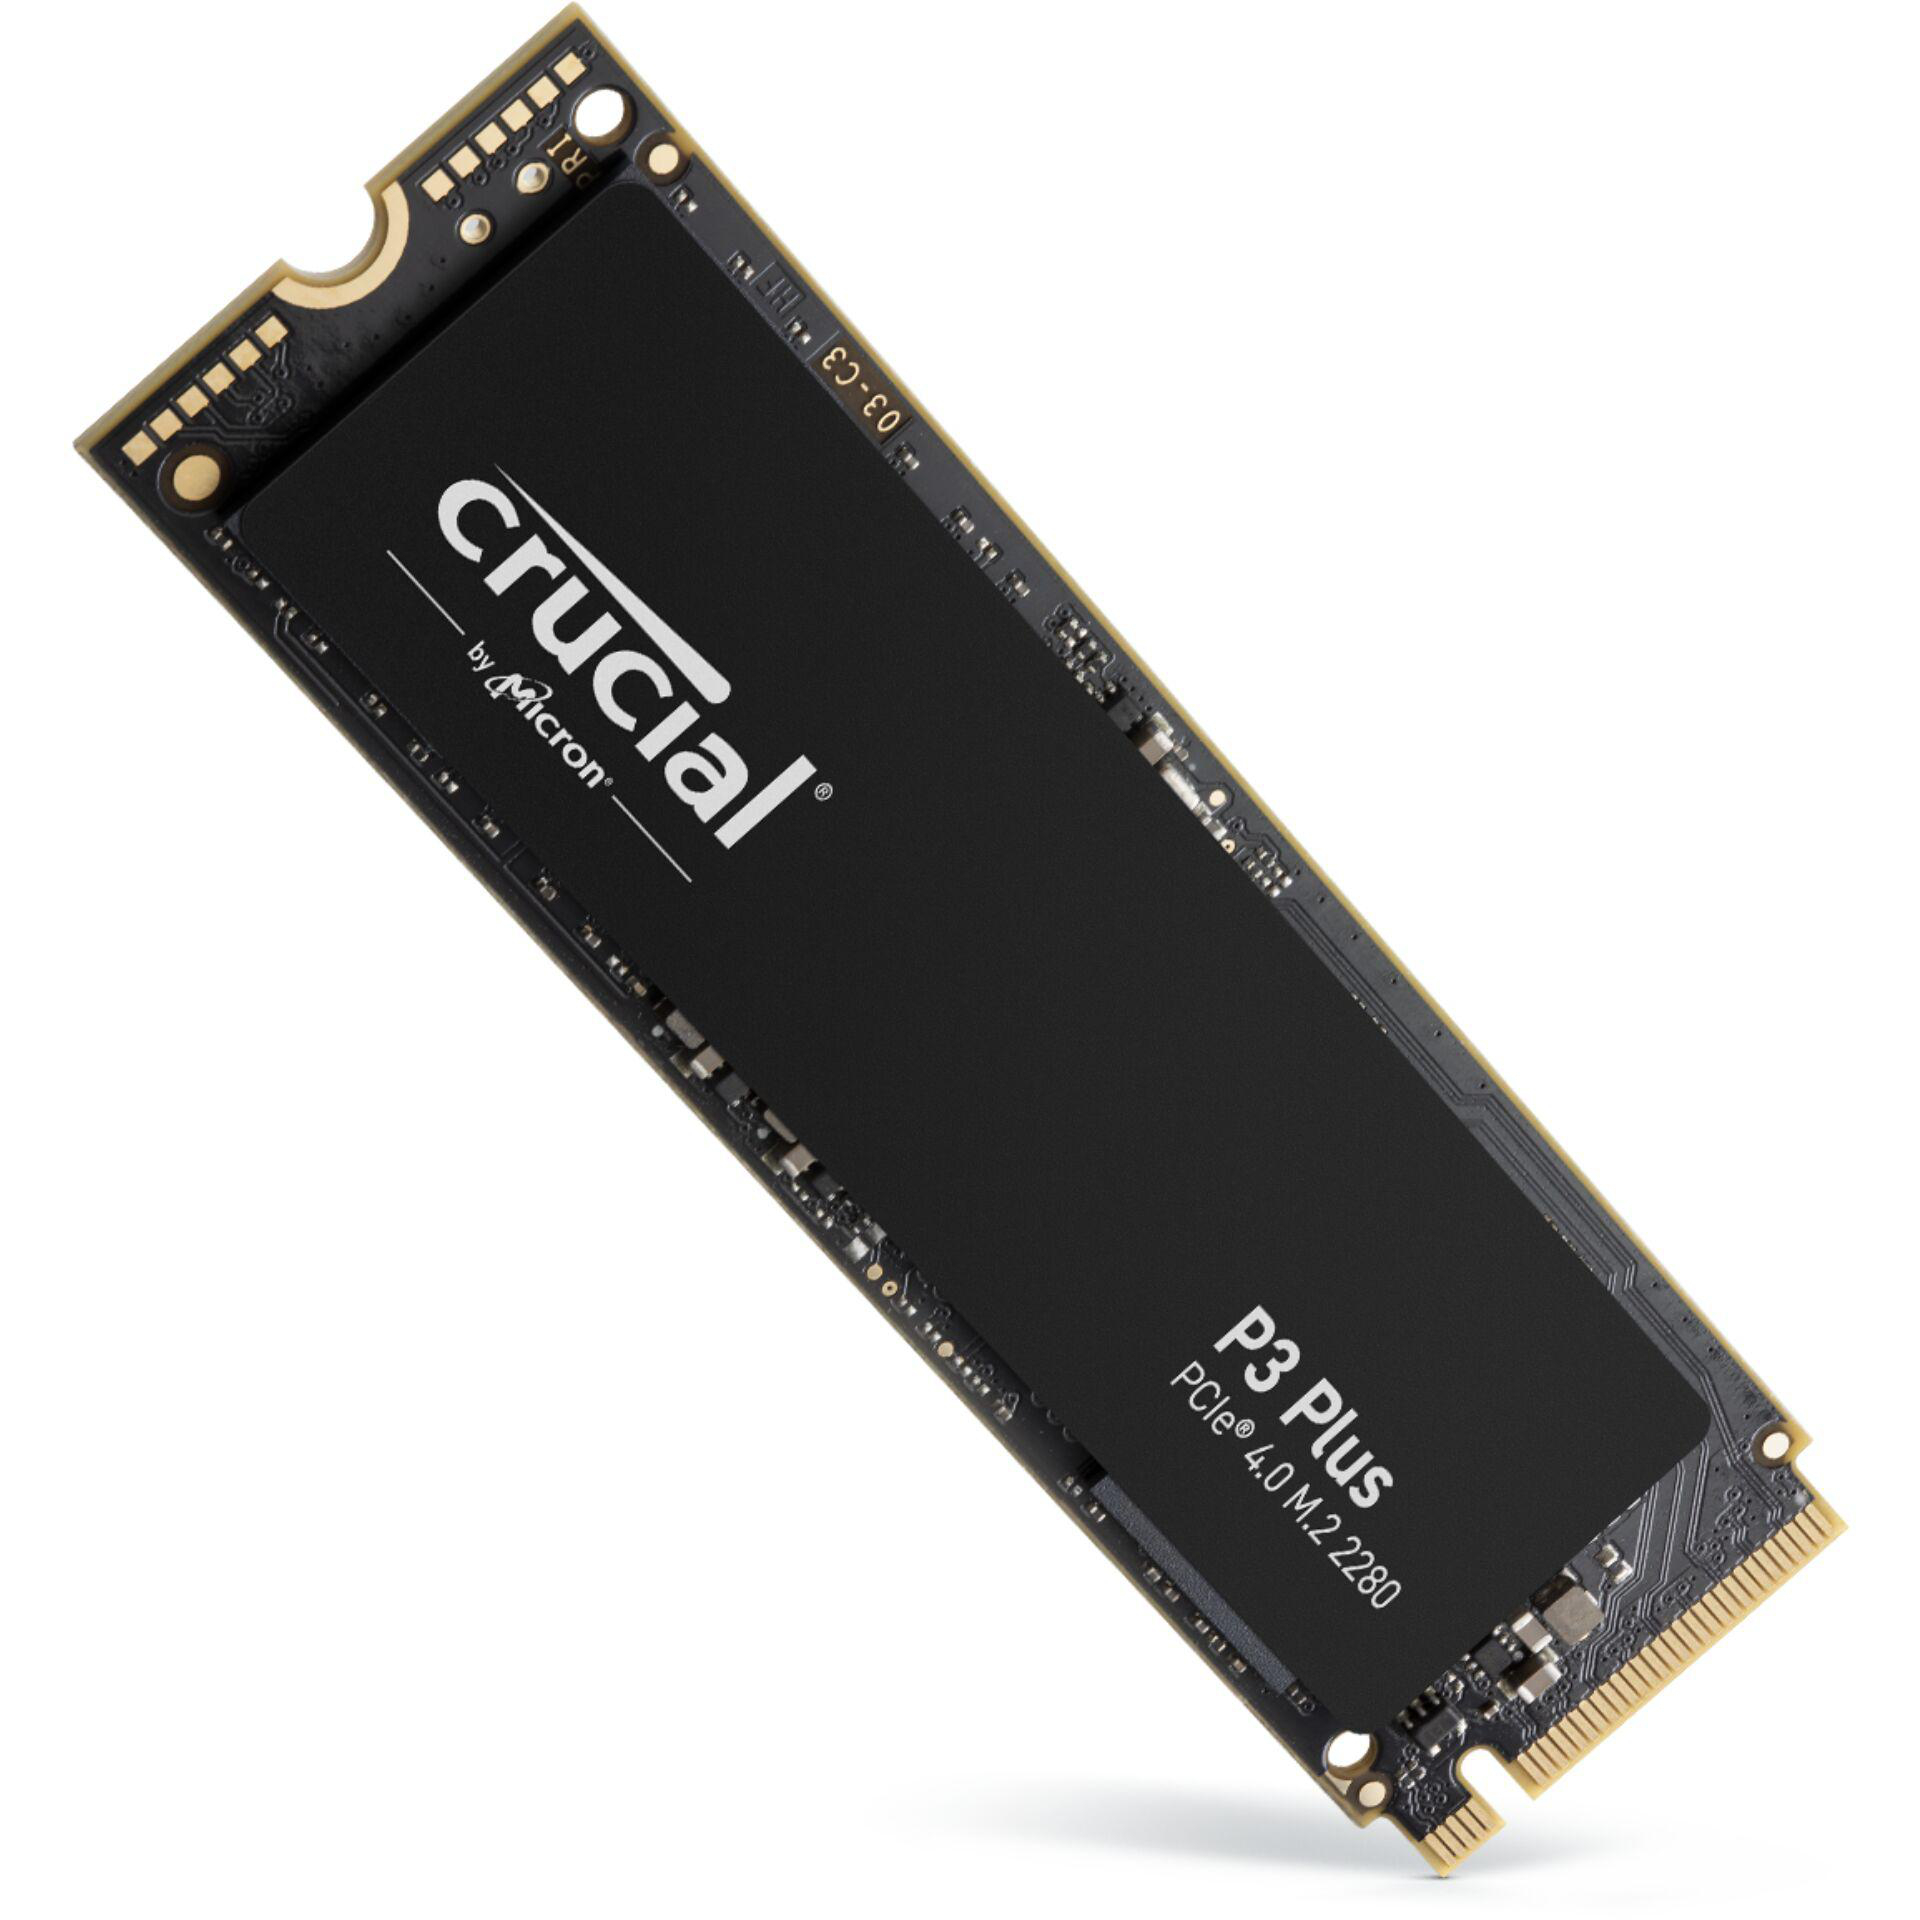 CRUCIAL P3 Plus SSD intern, intern M.2 SSD via PCIe, TB 2